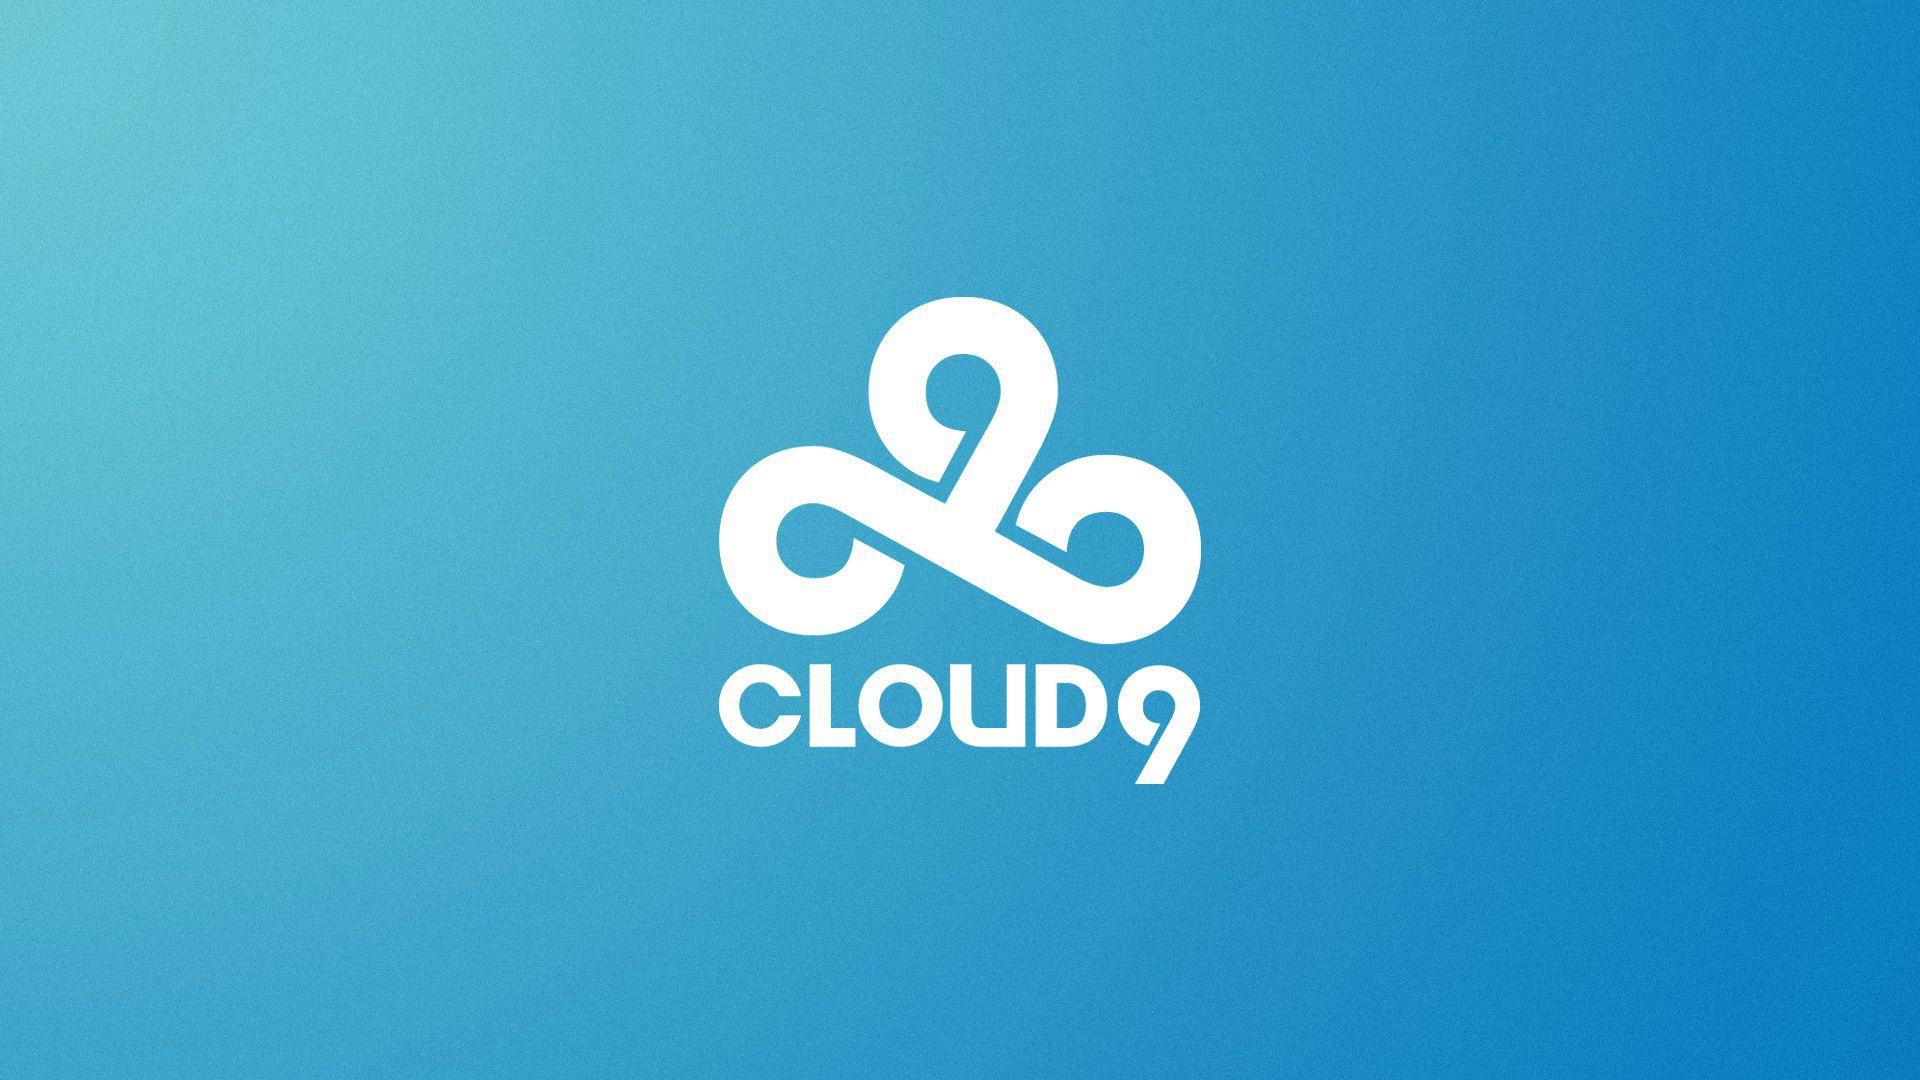 Cloud 9 Logo - Cloud9 Wallpapers - Wallpaper Cave